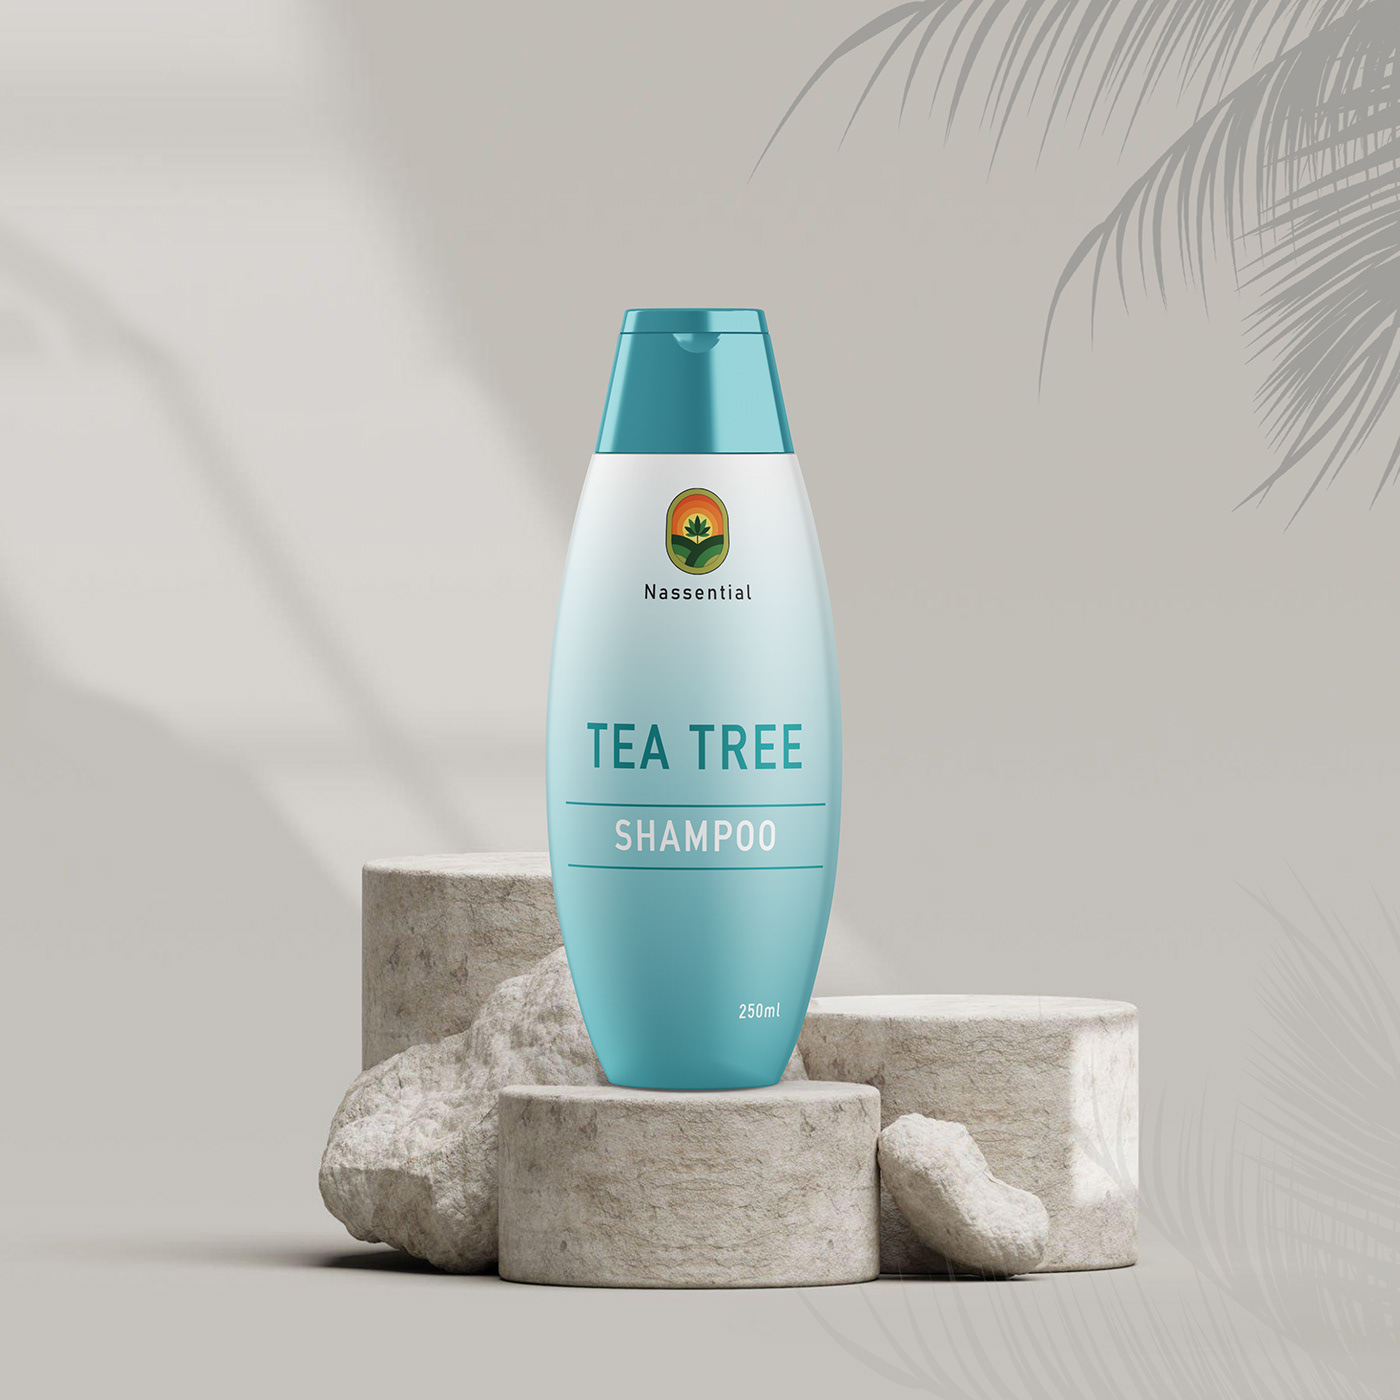 shampoo conditioner beauty Fashion  design Graphic Designer marketing   Advertising  hair tea tree shampoo